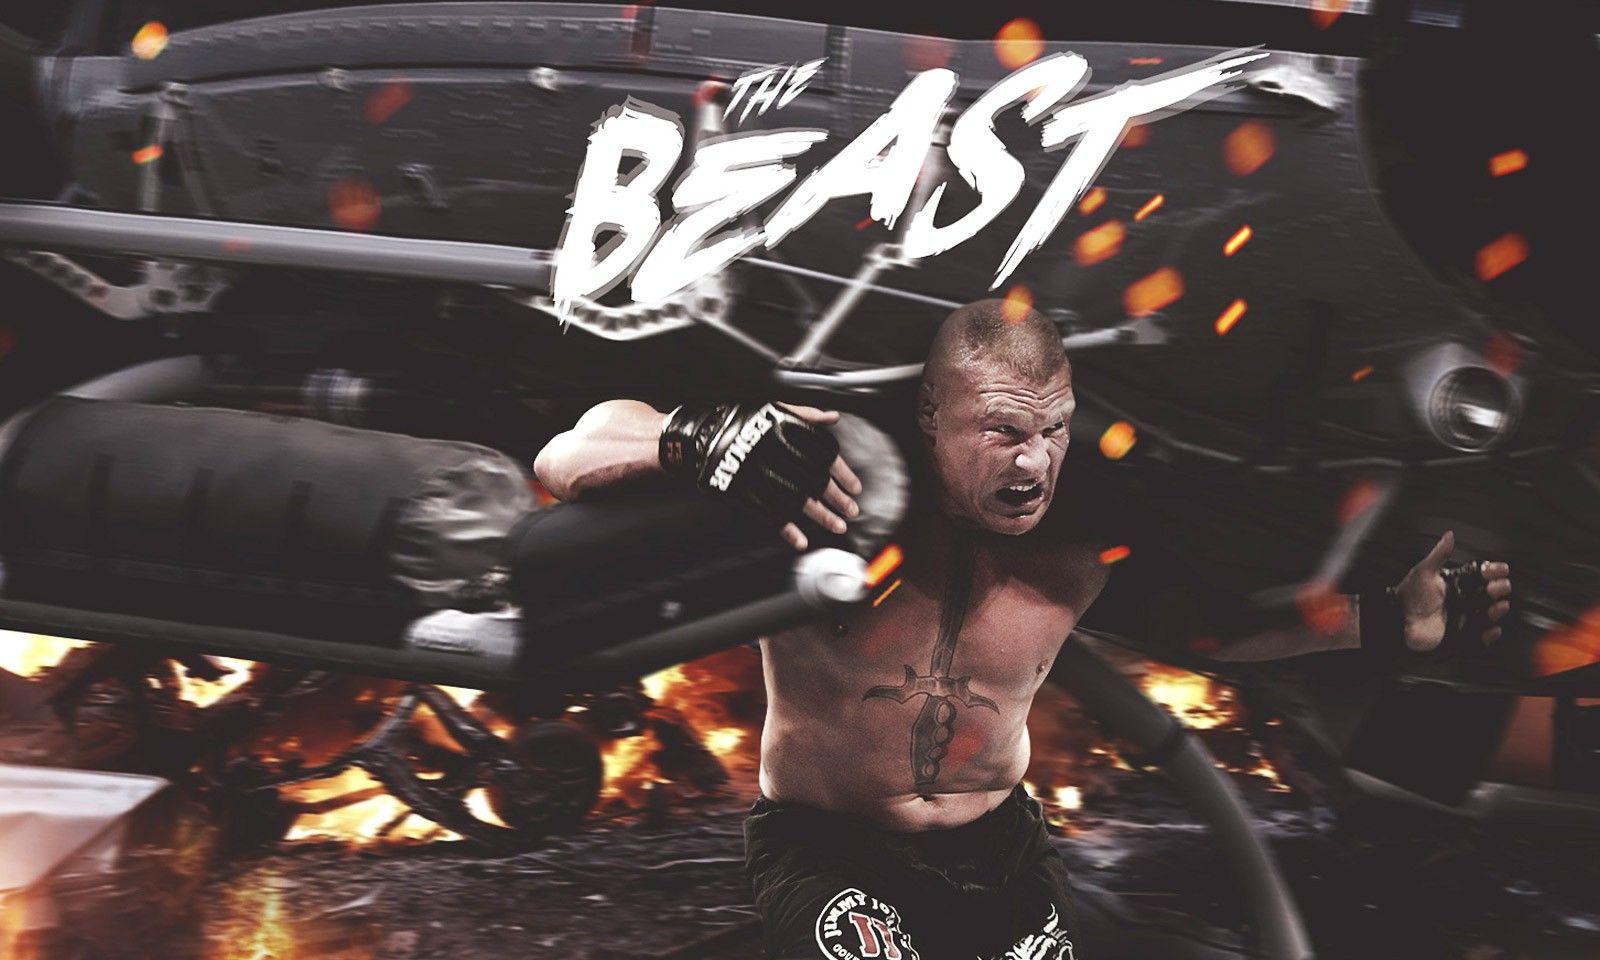 Brock Lesnar F5 HD Image, Get Free top quality Brock Lesnar F5 HD